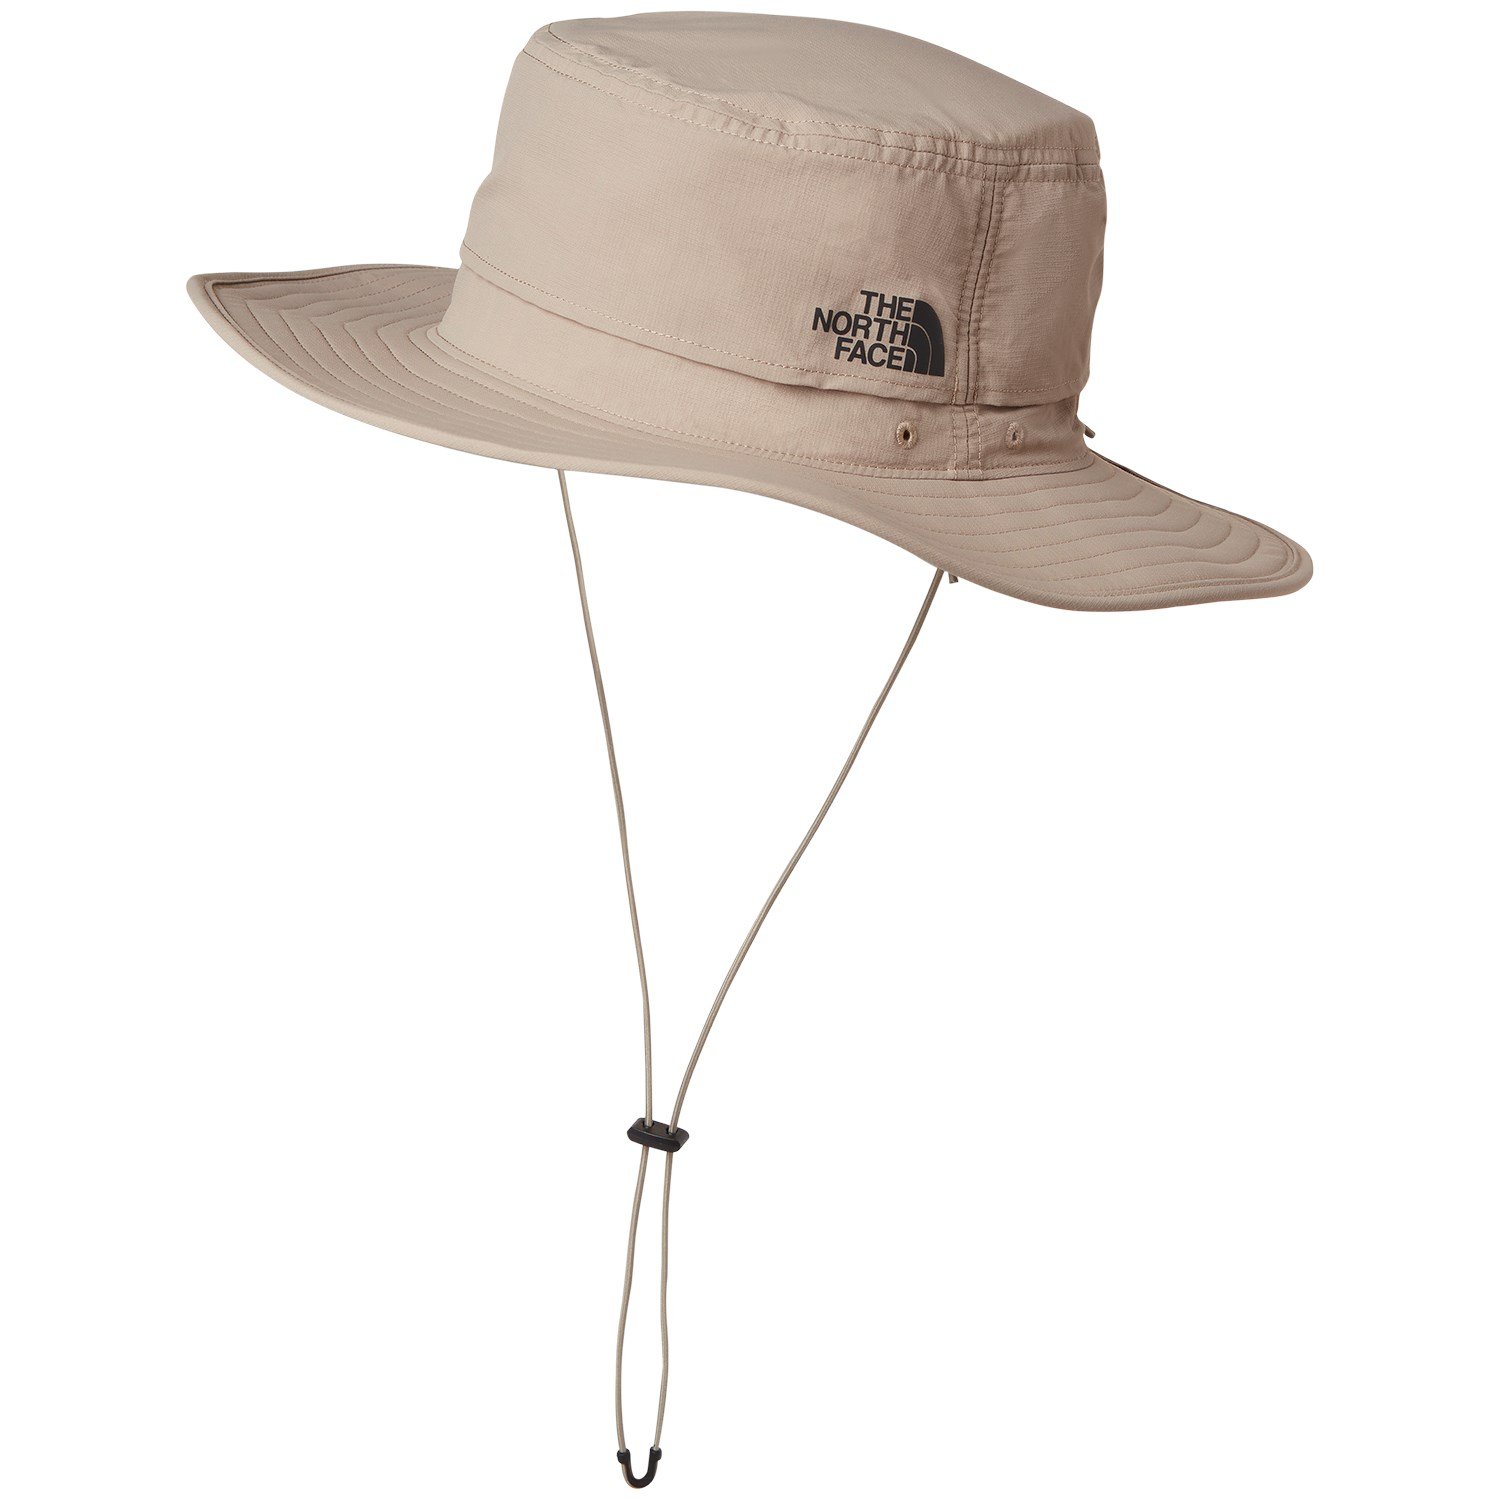 The North Face Horizon Breeze Brimmer Hat Black S/M